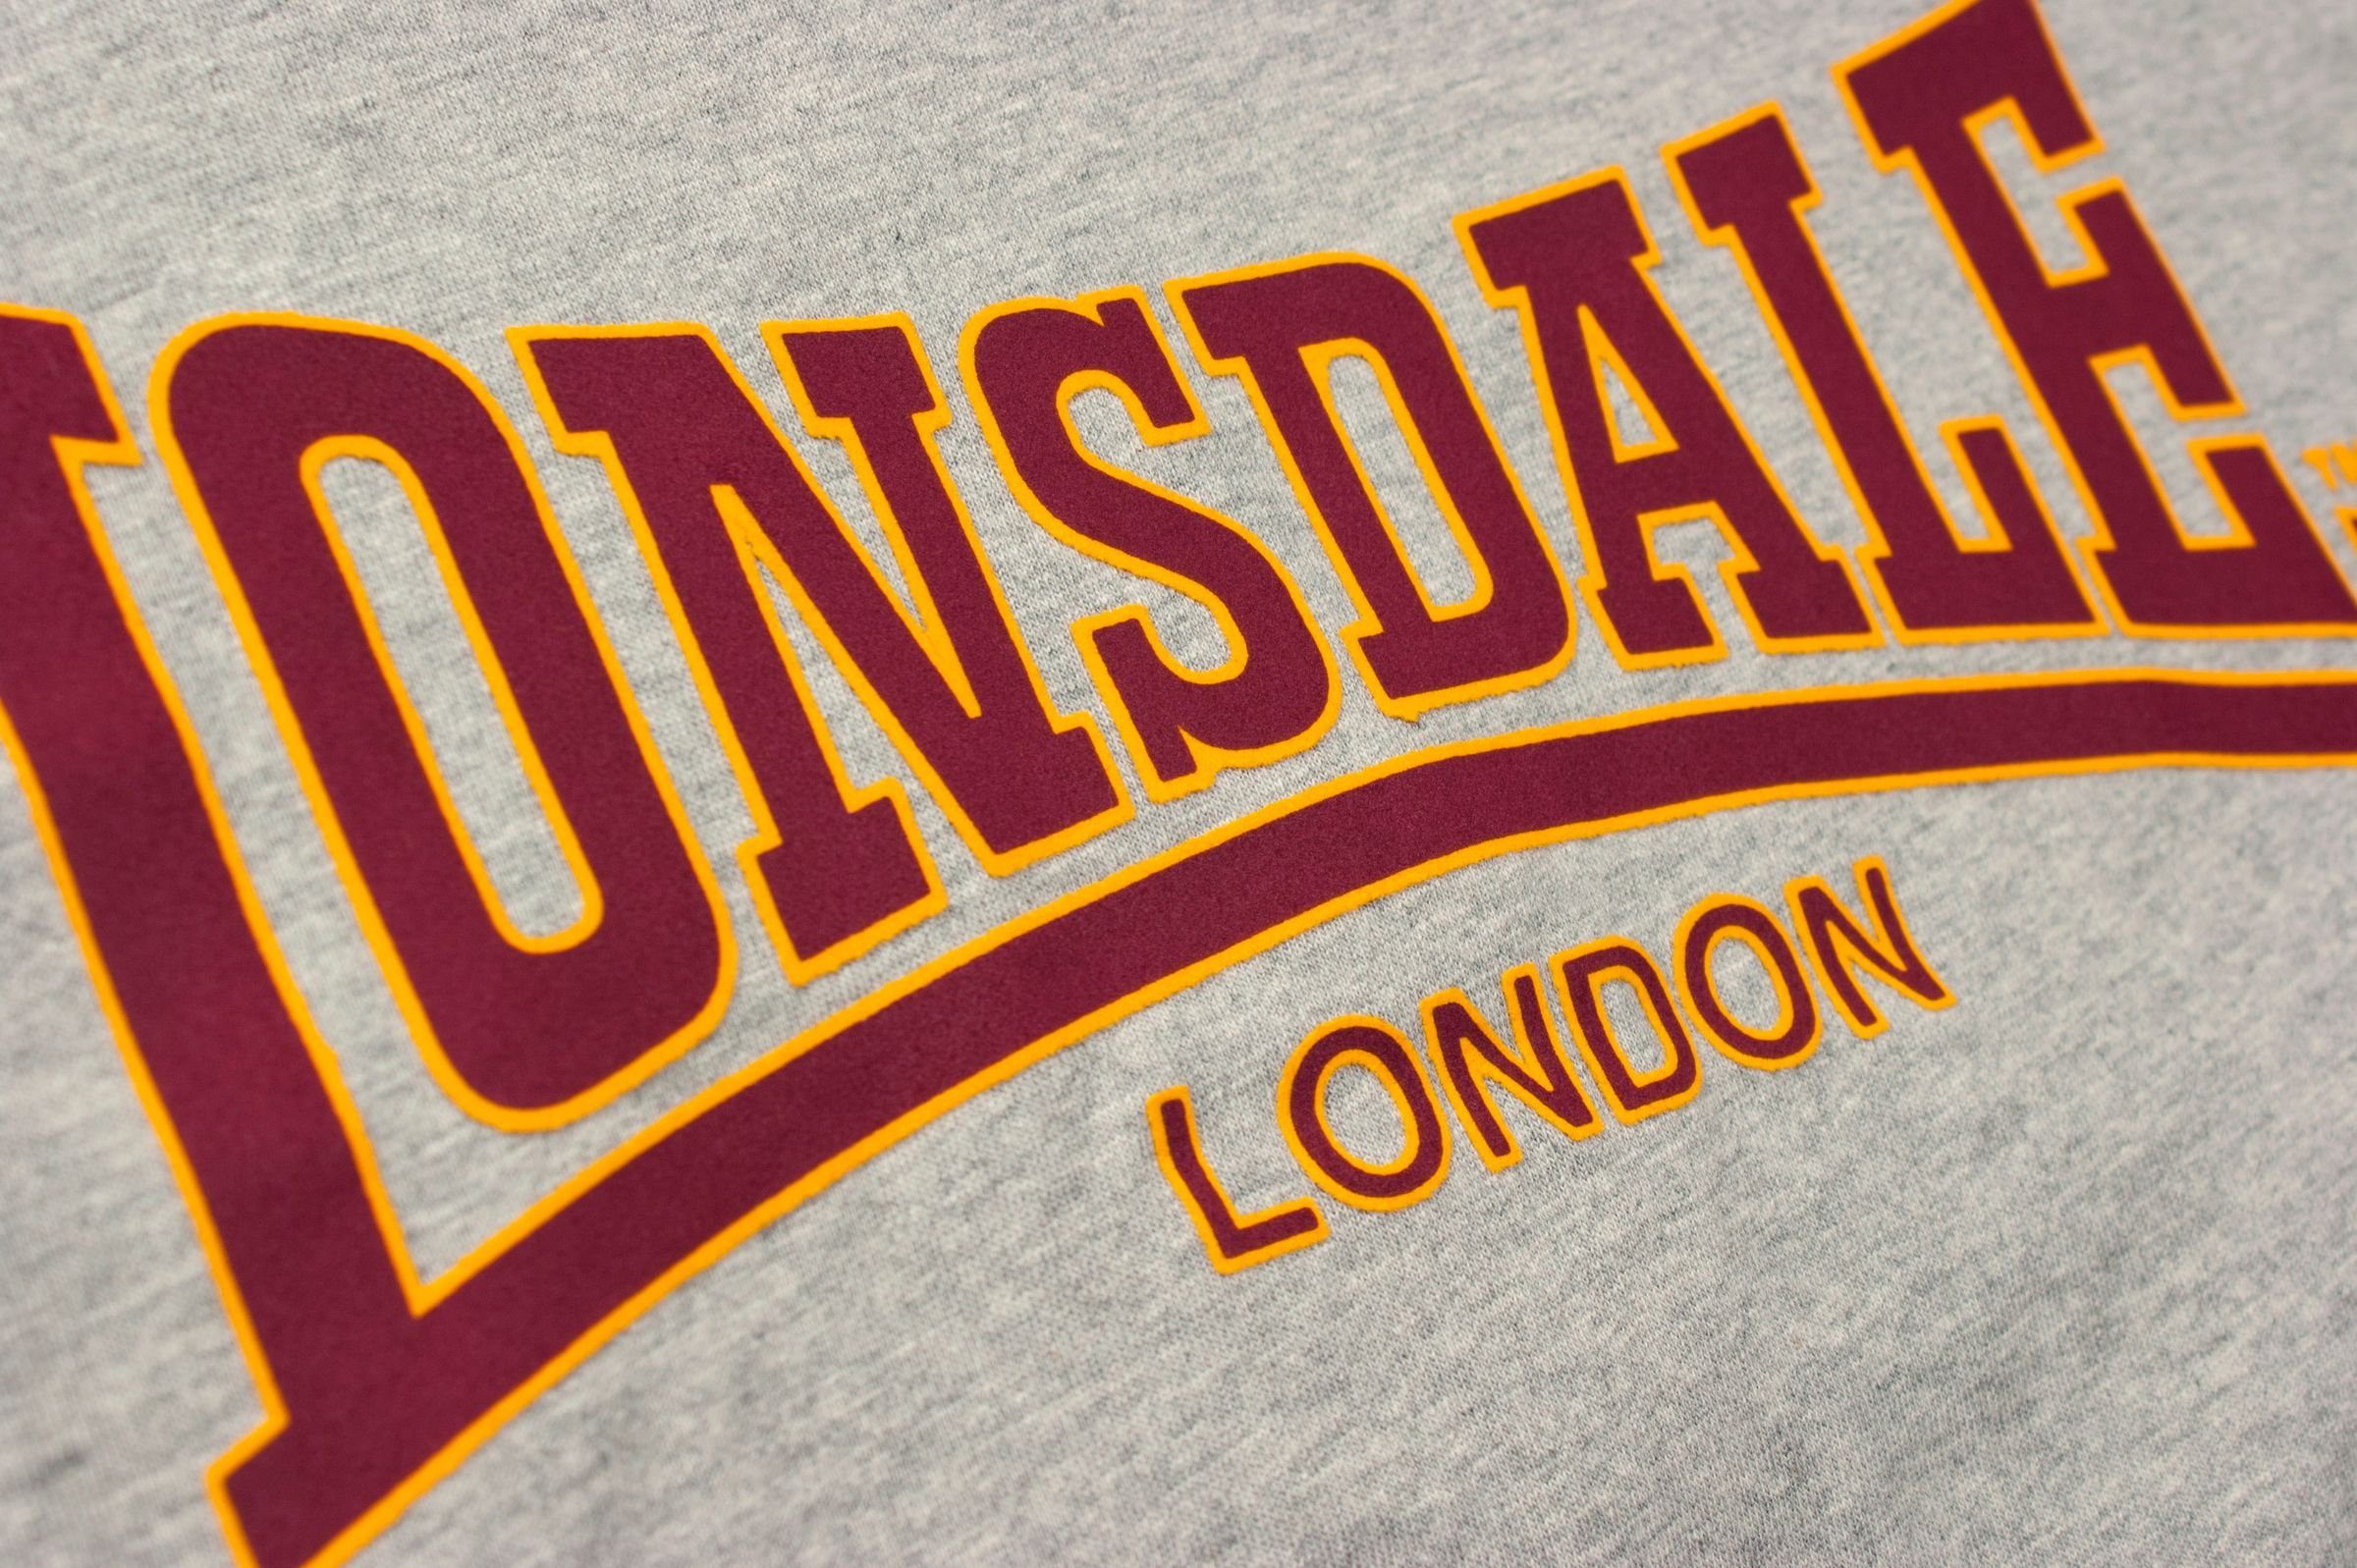 Lonsdale T-Shirt Classic T-Shirt Lonsdale Herren Adult grey marl